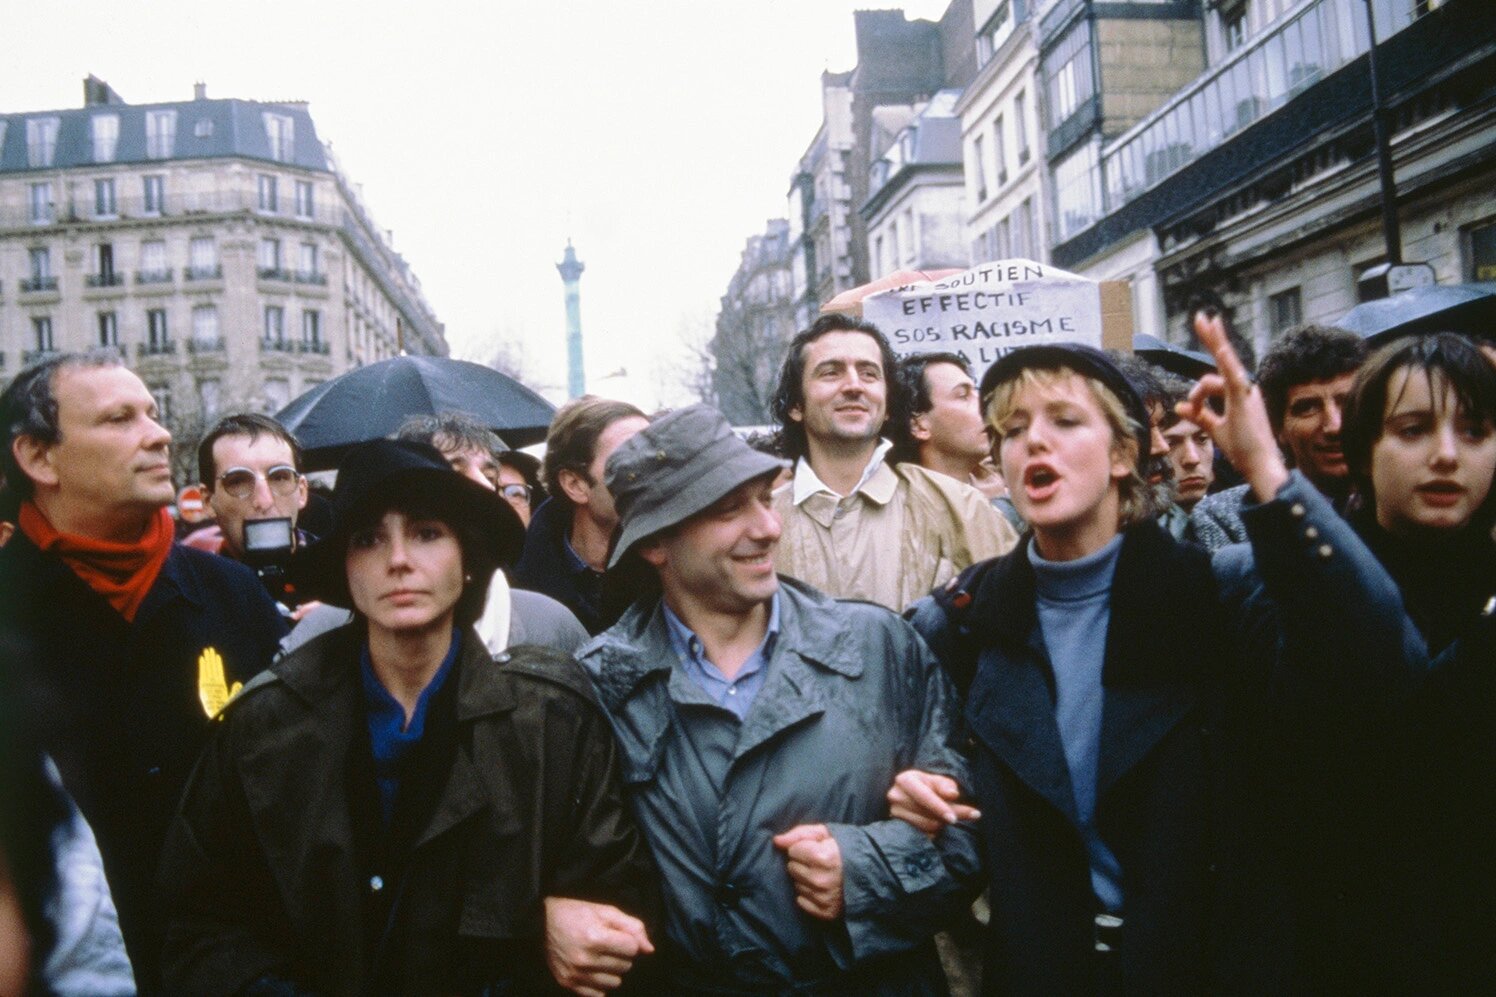 Bernard-Henri Lévy among the crowd at a demonstration for SOS Racisme in Paris on Nov. 7, 1985.